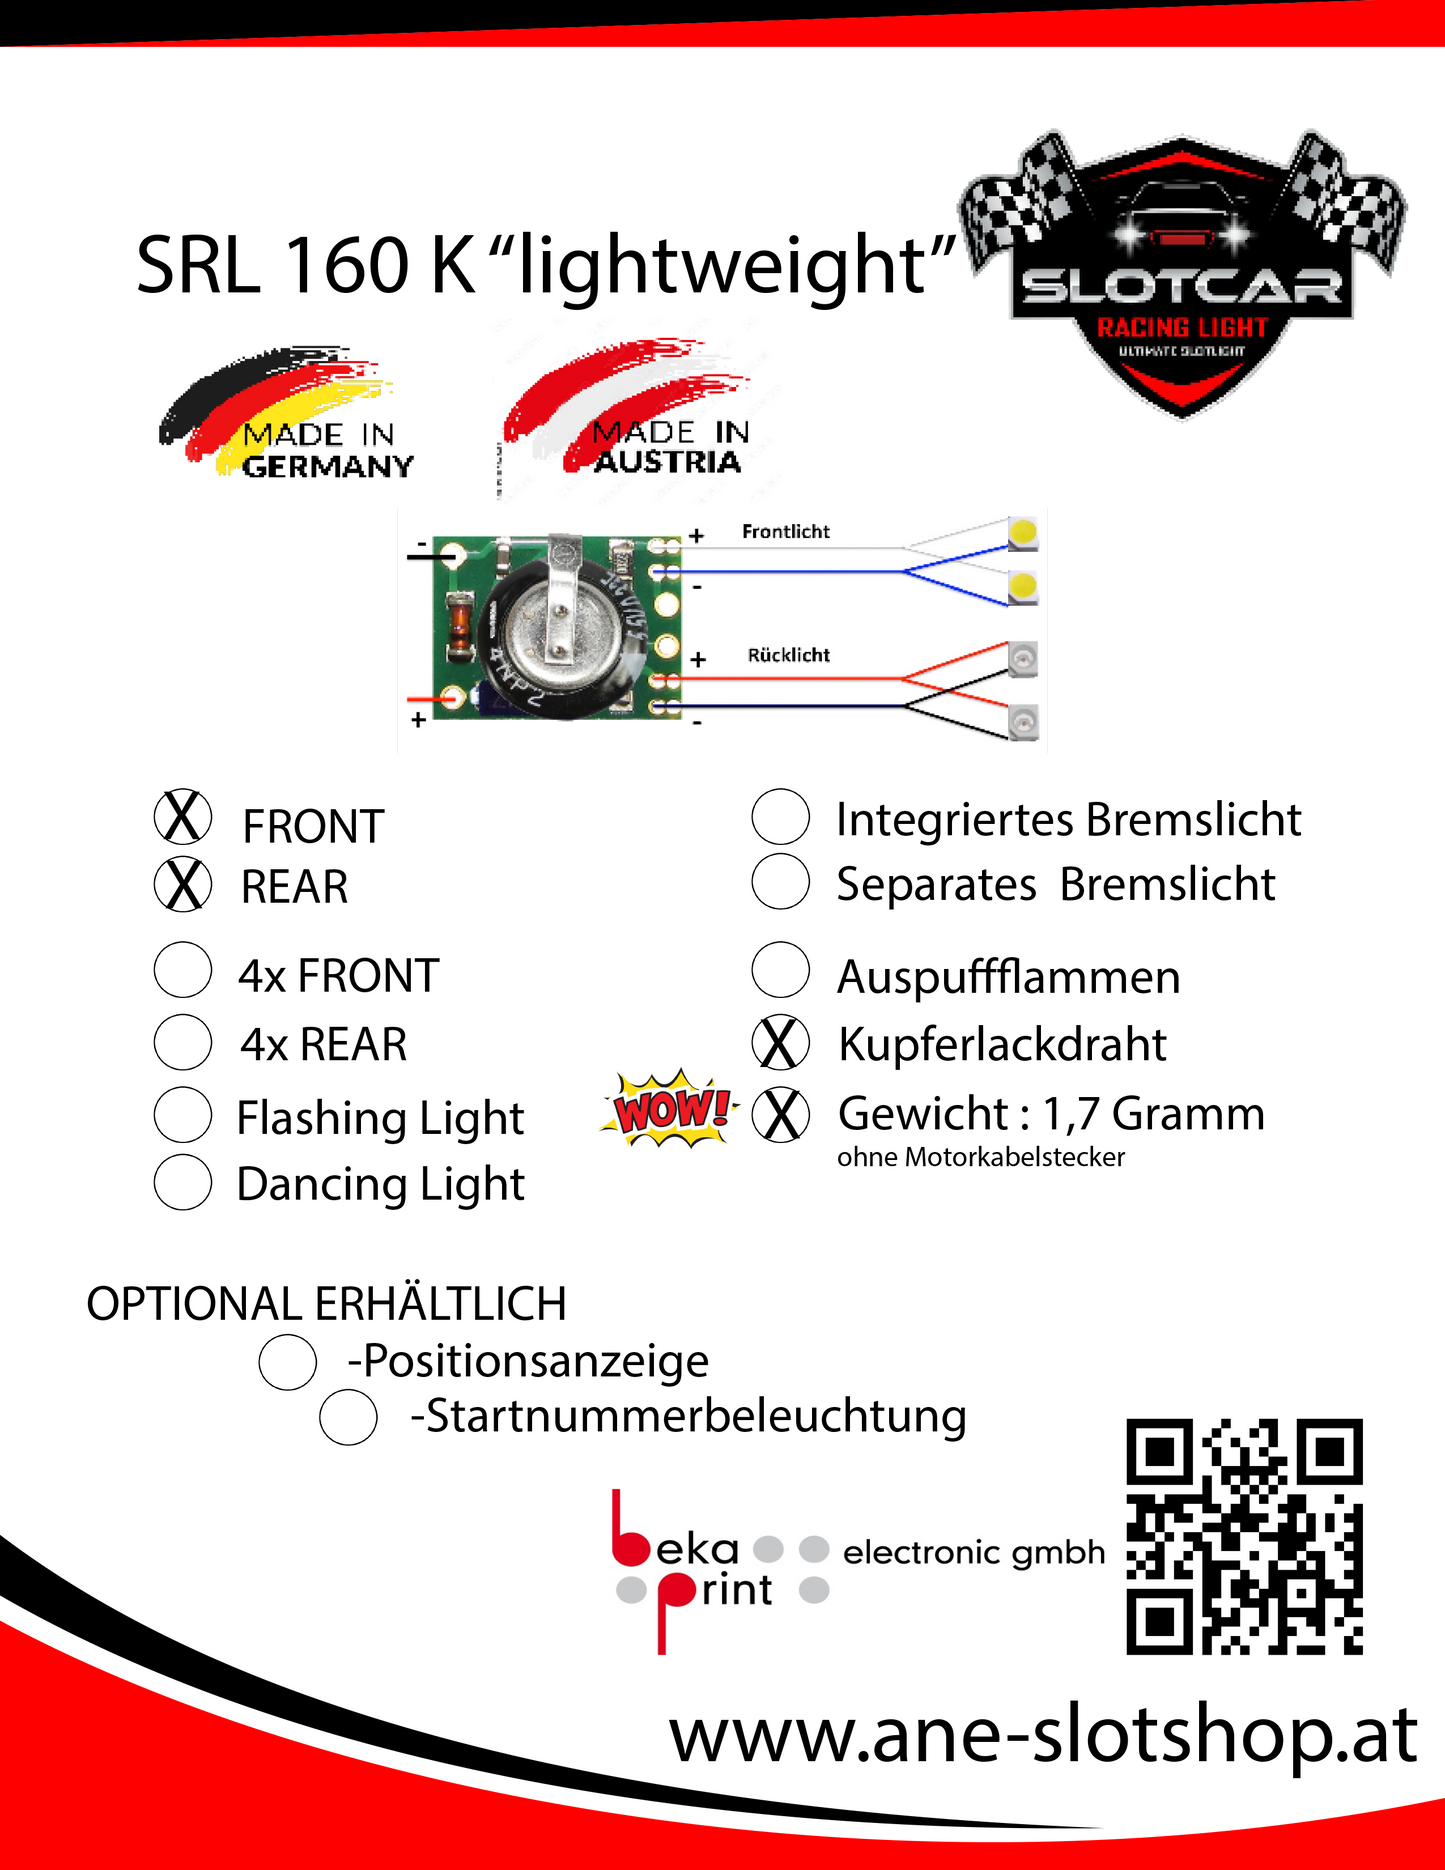 SRL-160 K "lightweight" Yellow